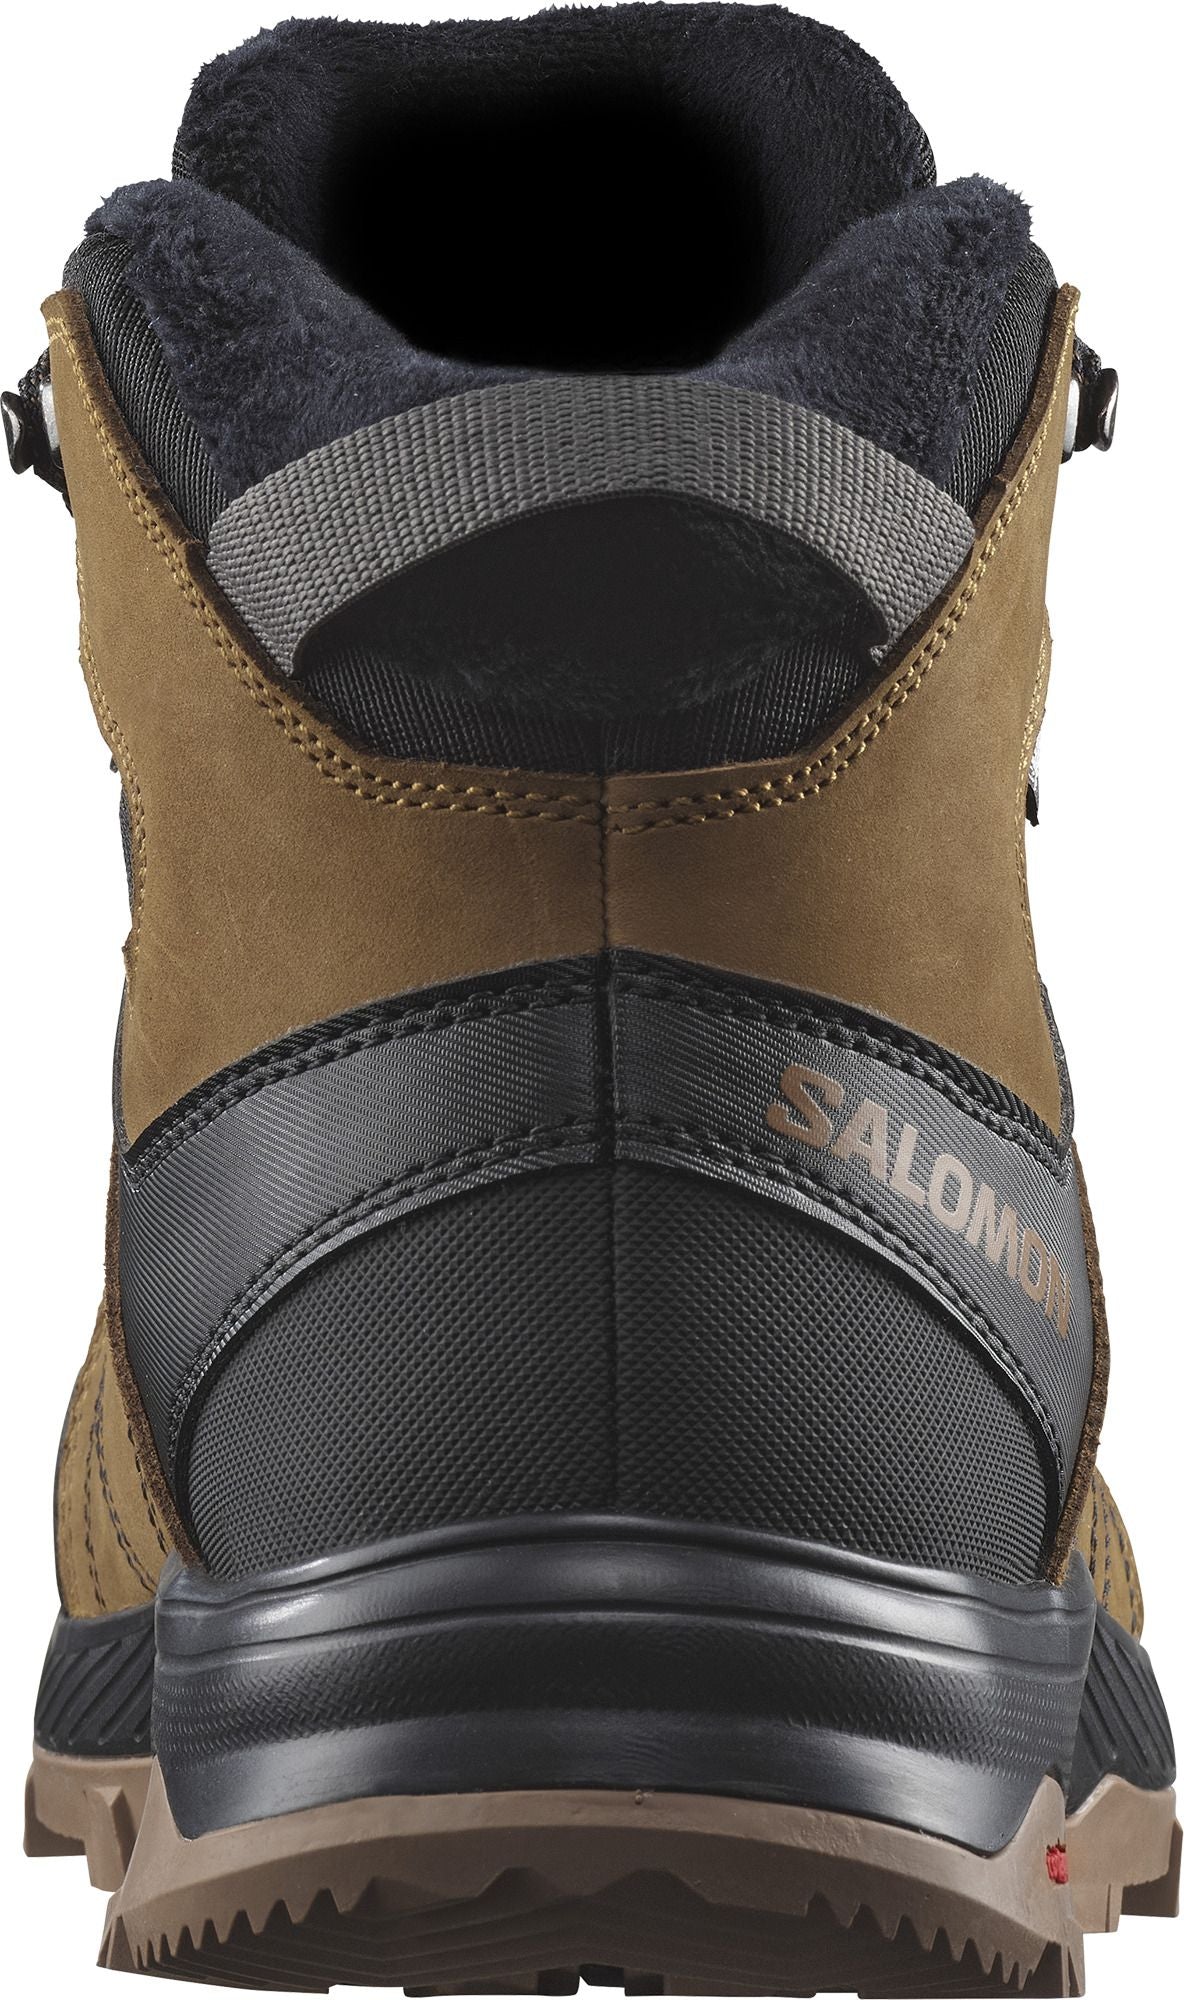 Salomon Boots Outchill Ts Cswp Rubber